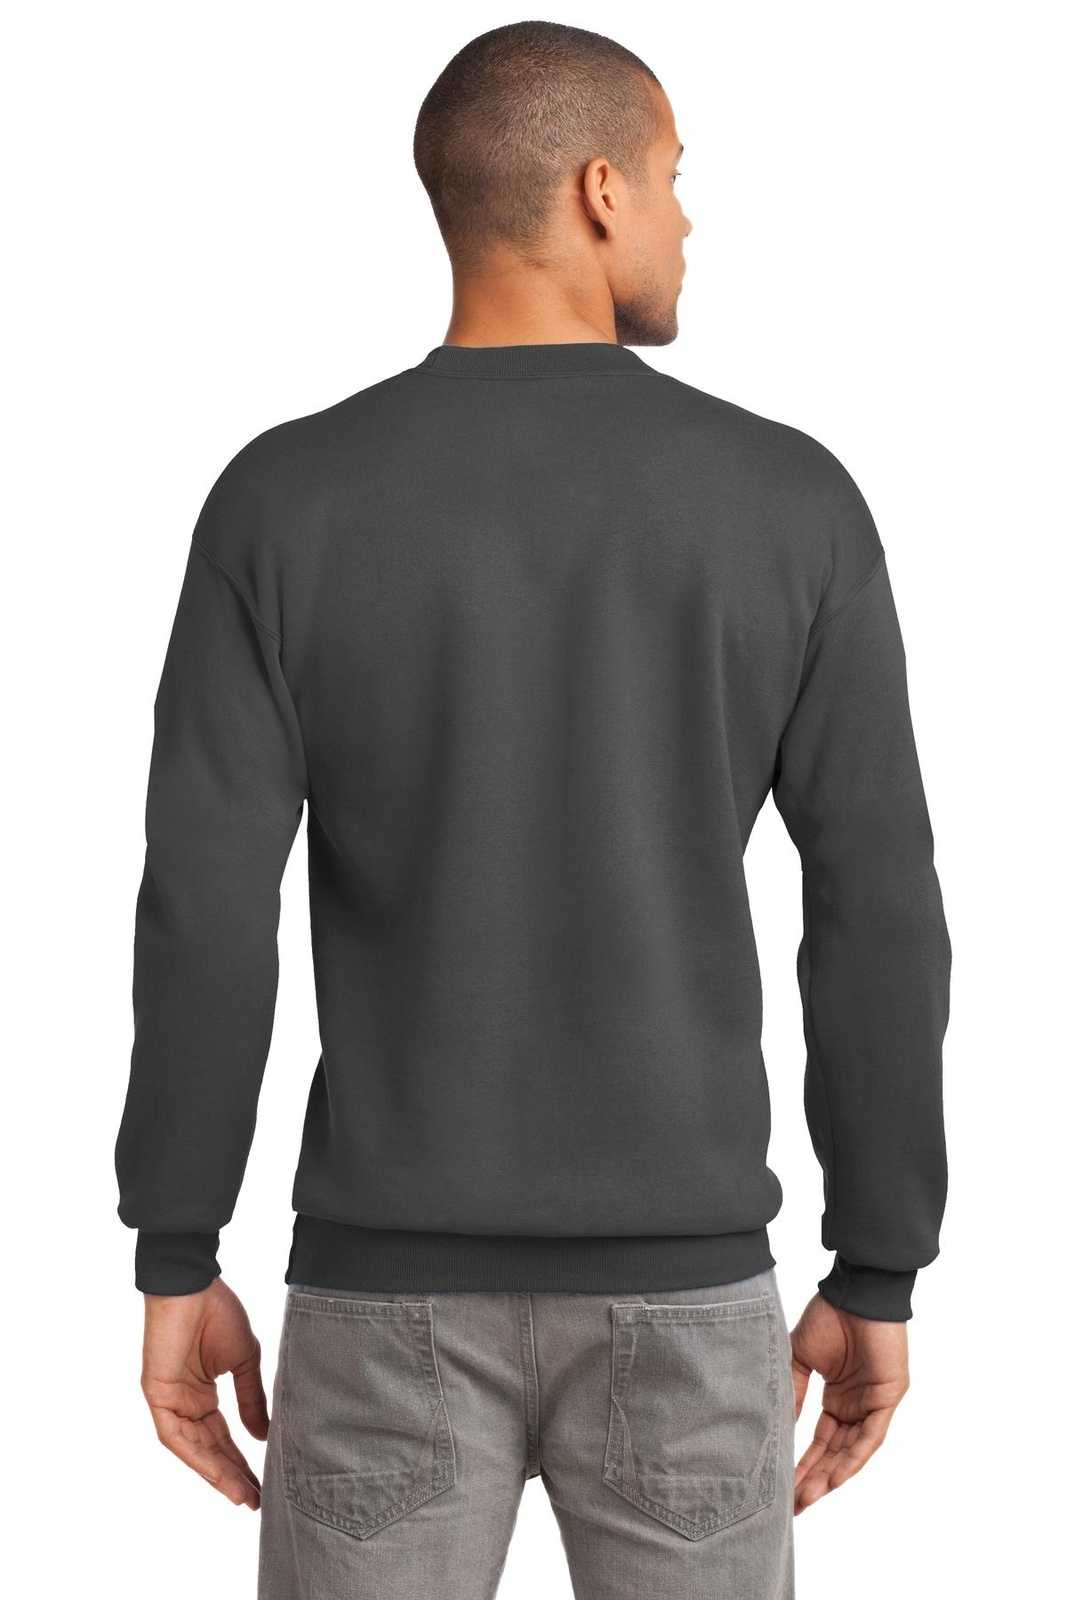 Port & Company PC90T Tall Essential Fleece Crewneck Sweatshirt - Charcoal - HIT a Double - 1